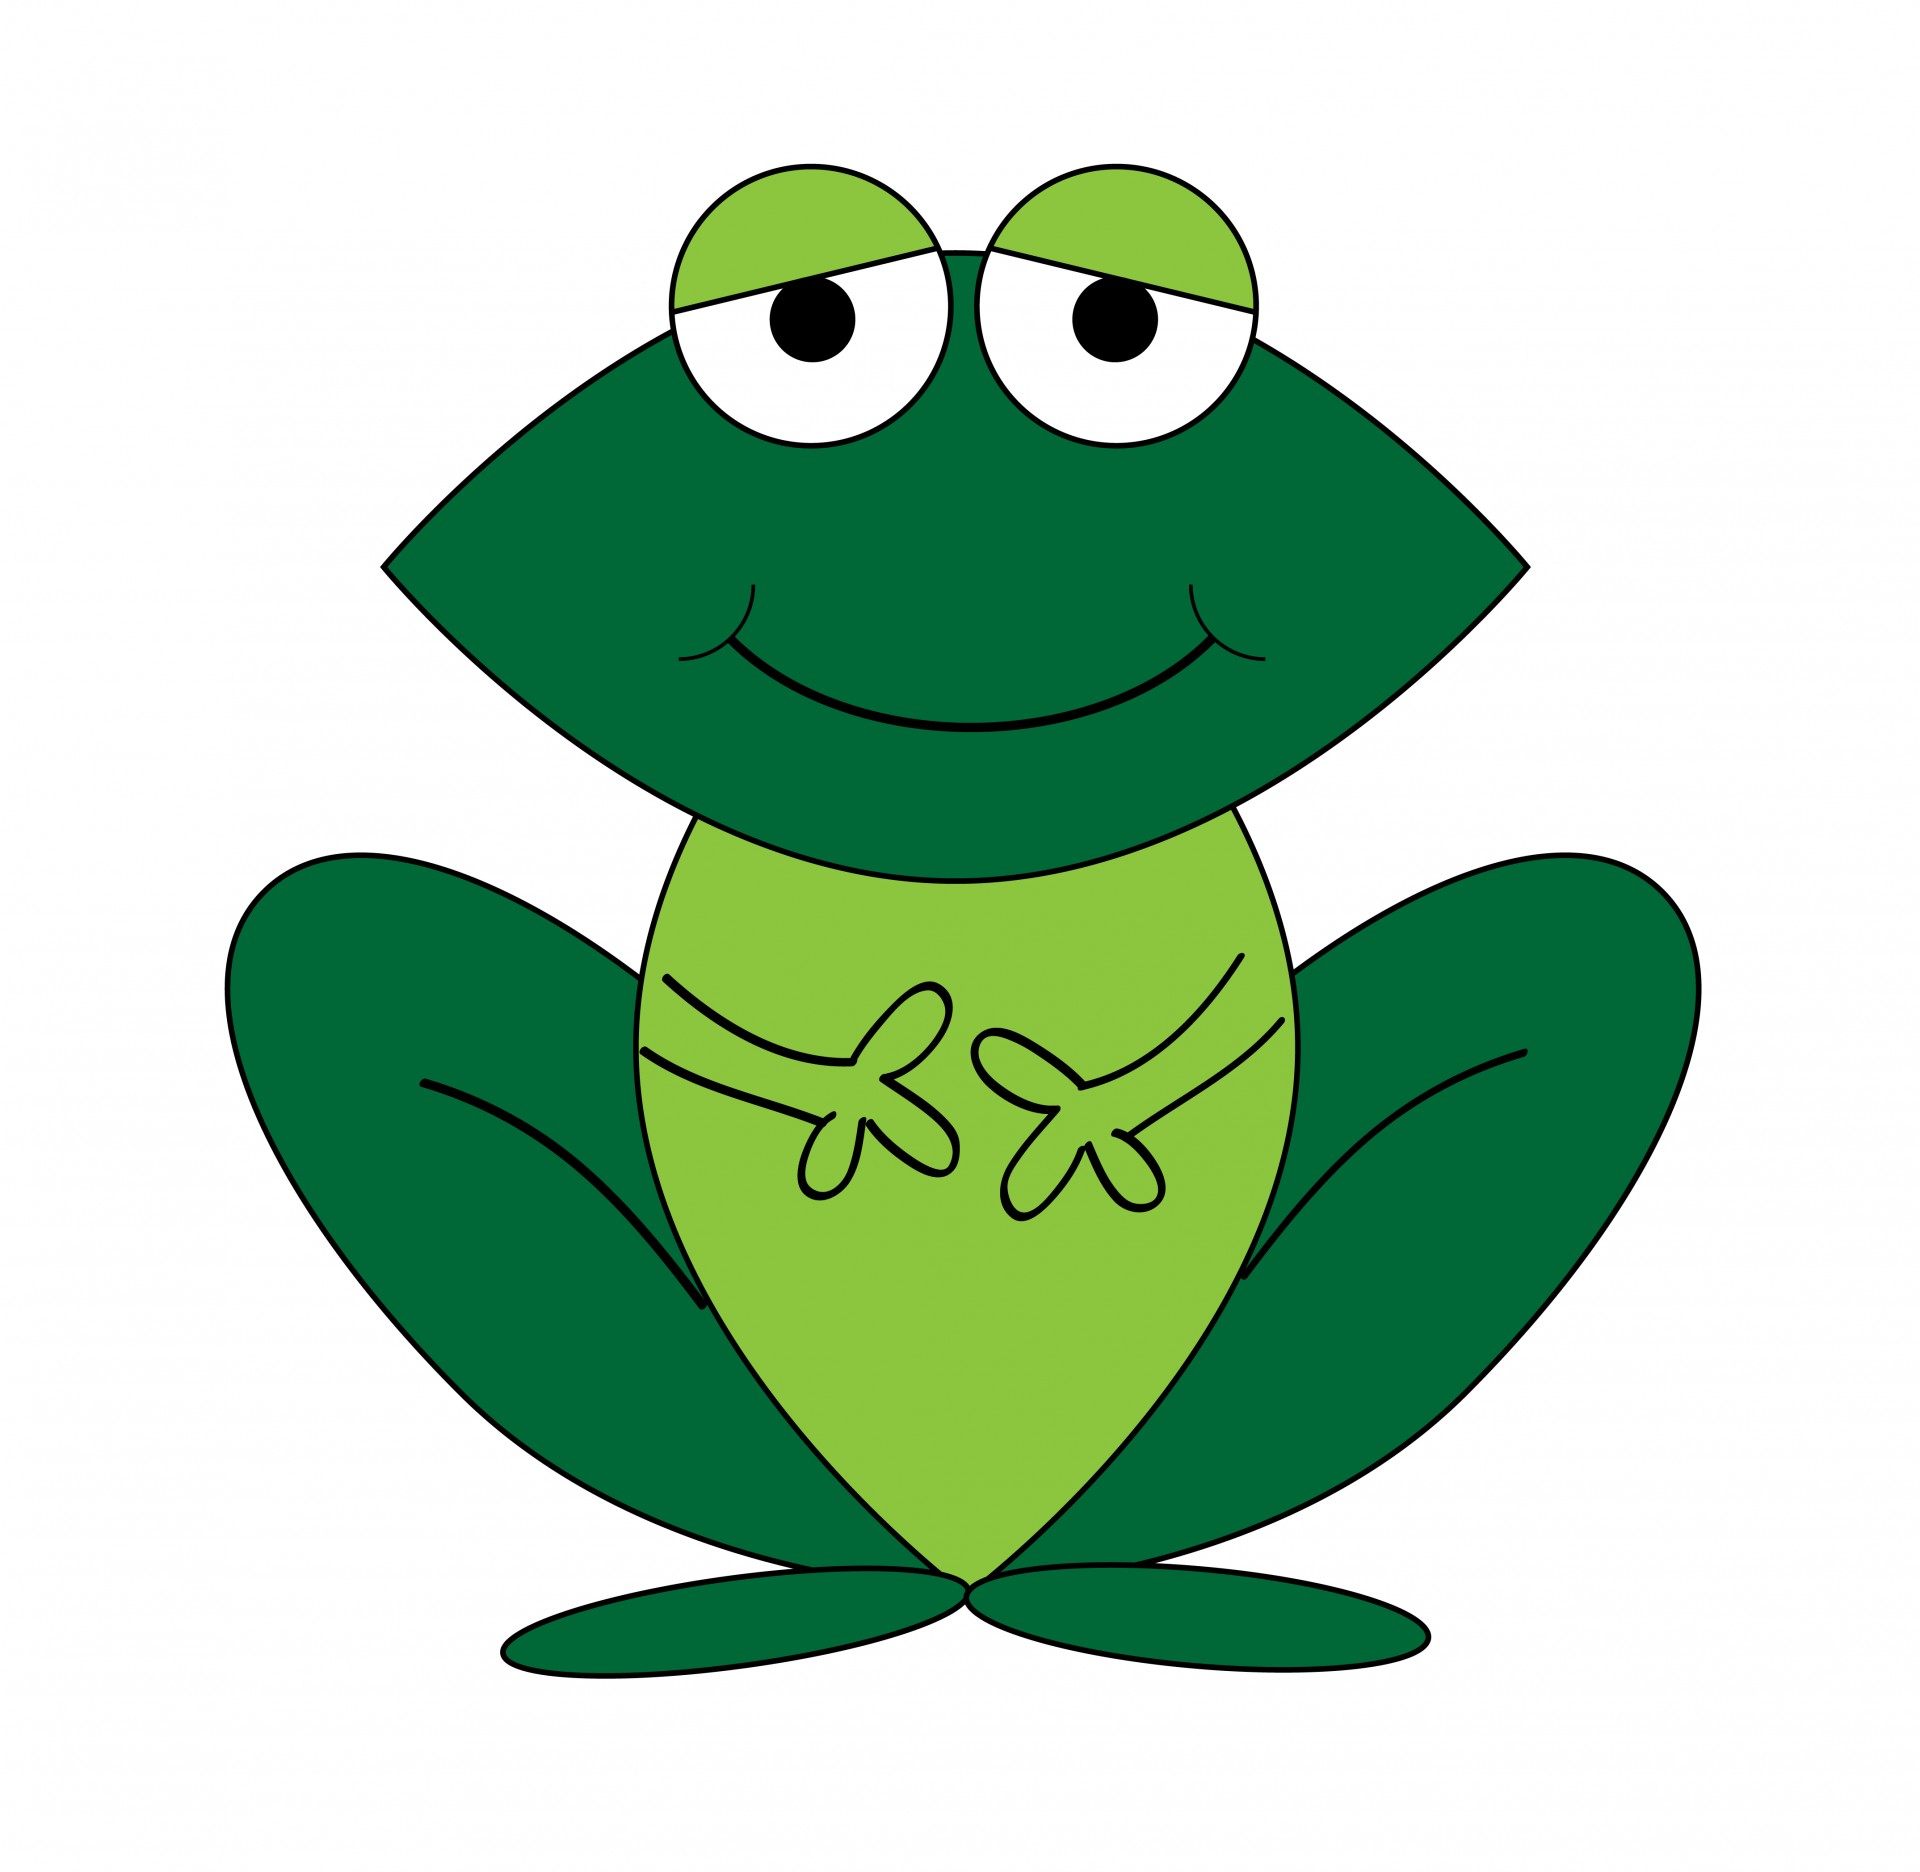 Cute frog cartoon illustration clipart